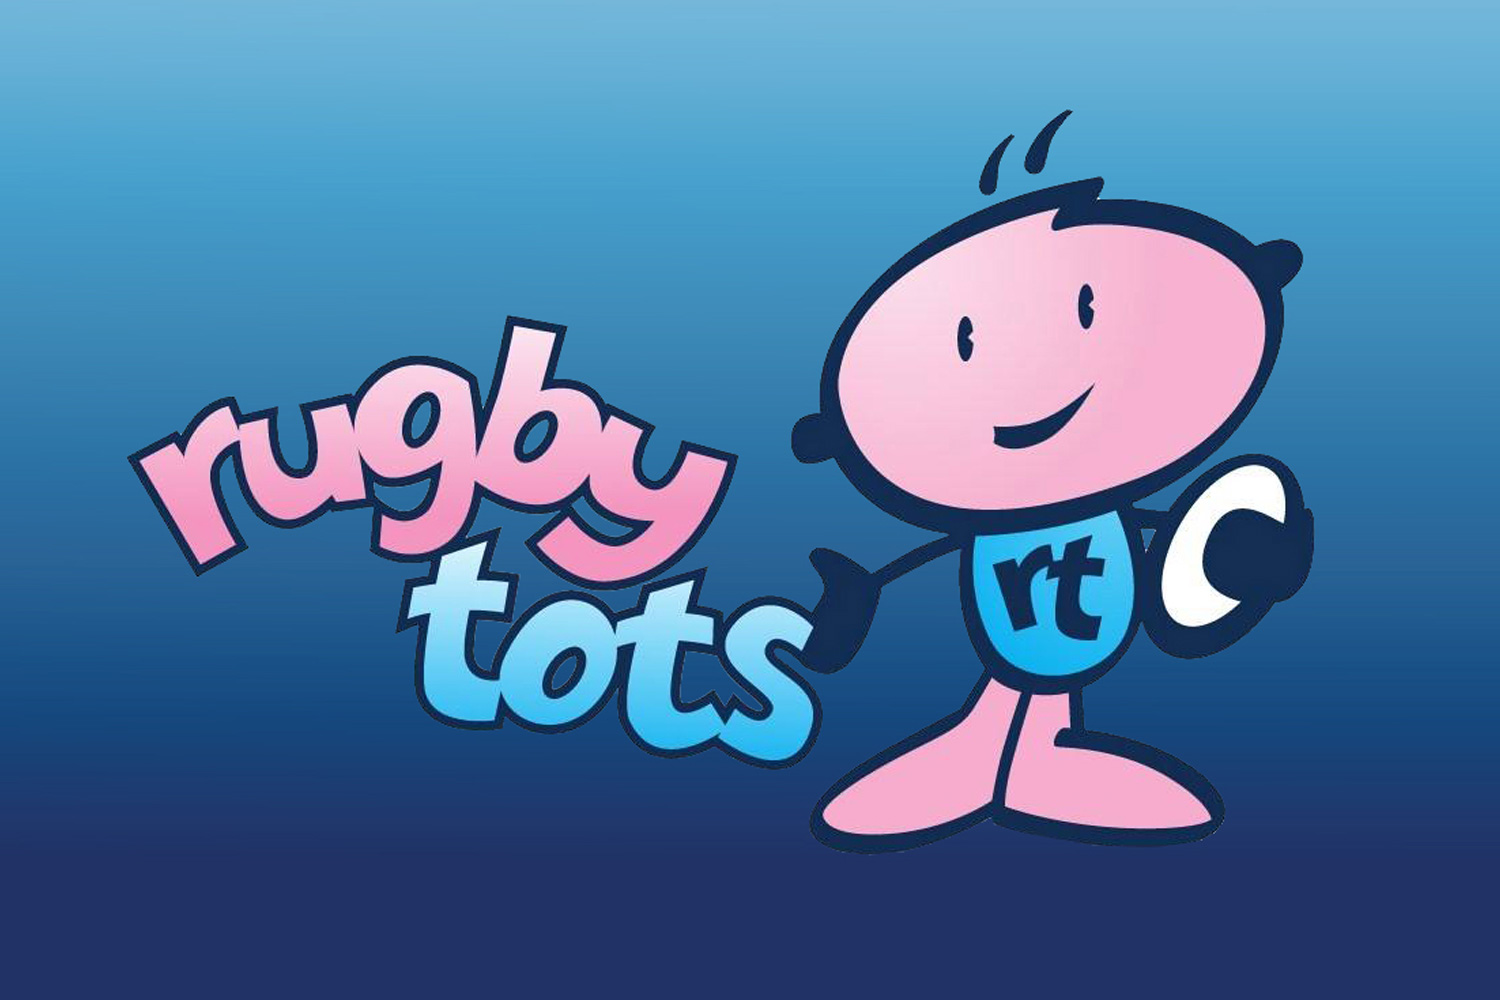 Old Rugbytots logo